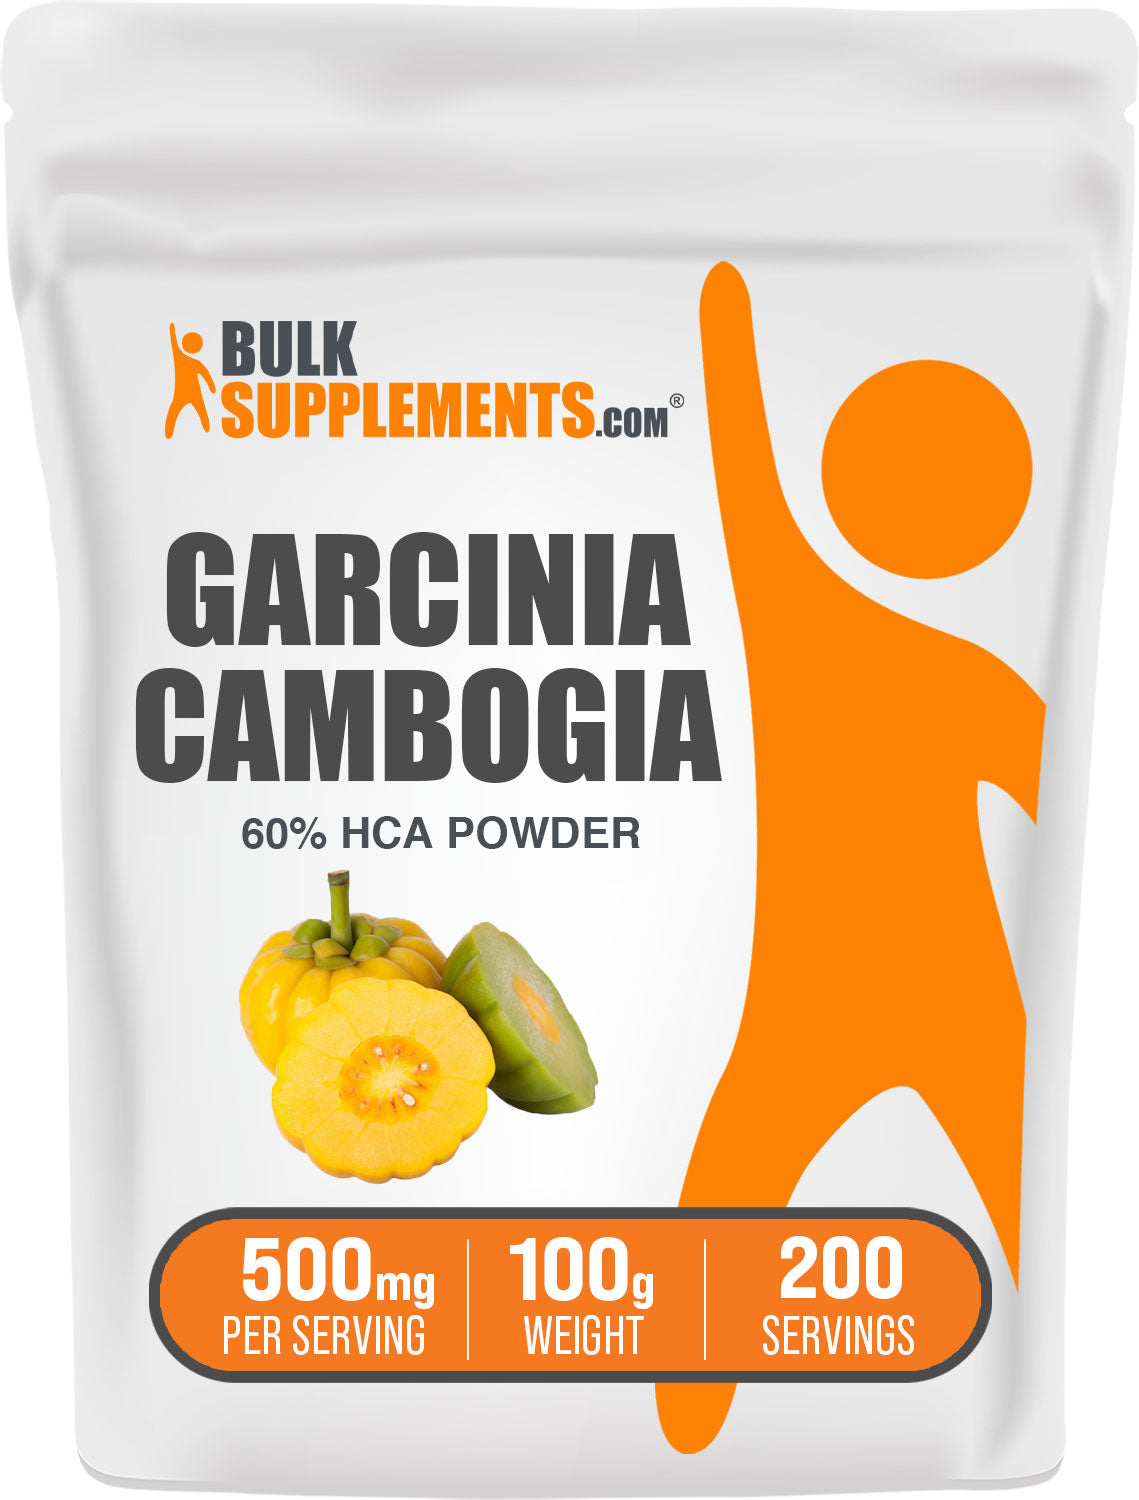 BulkSupplements.com Garcinia Cambogia Extract 60% HCA powder 100g bag